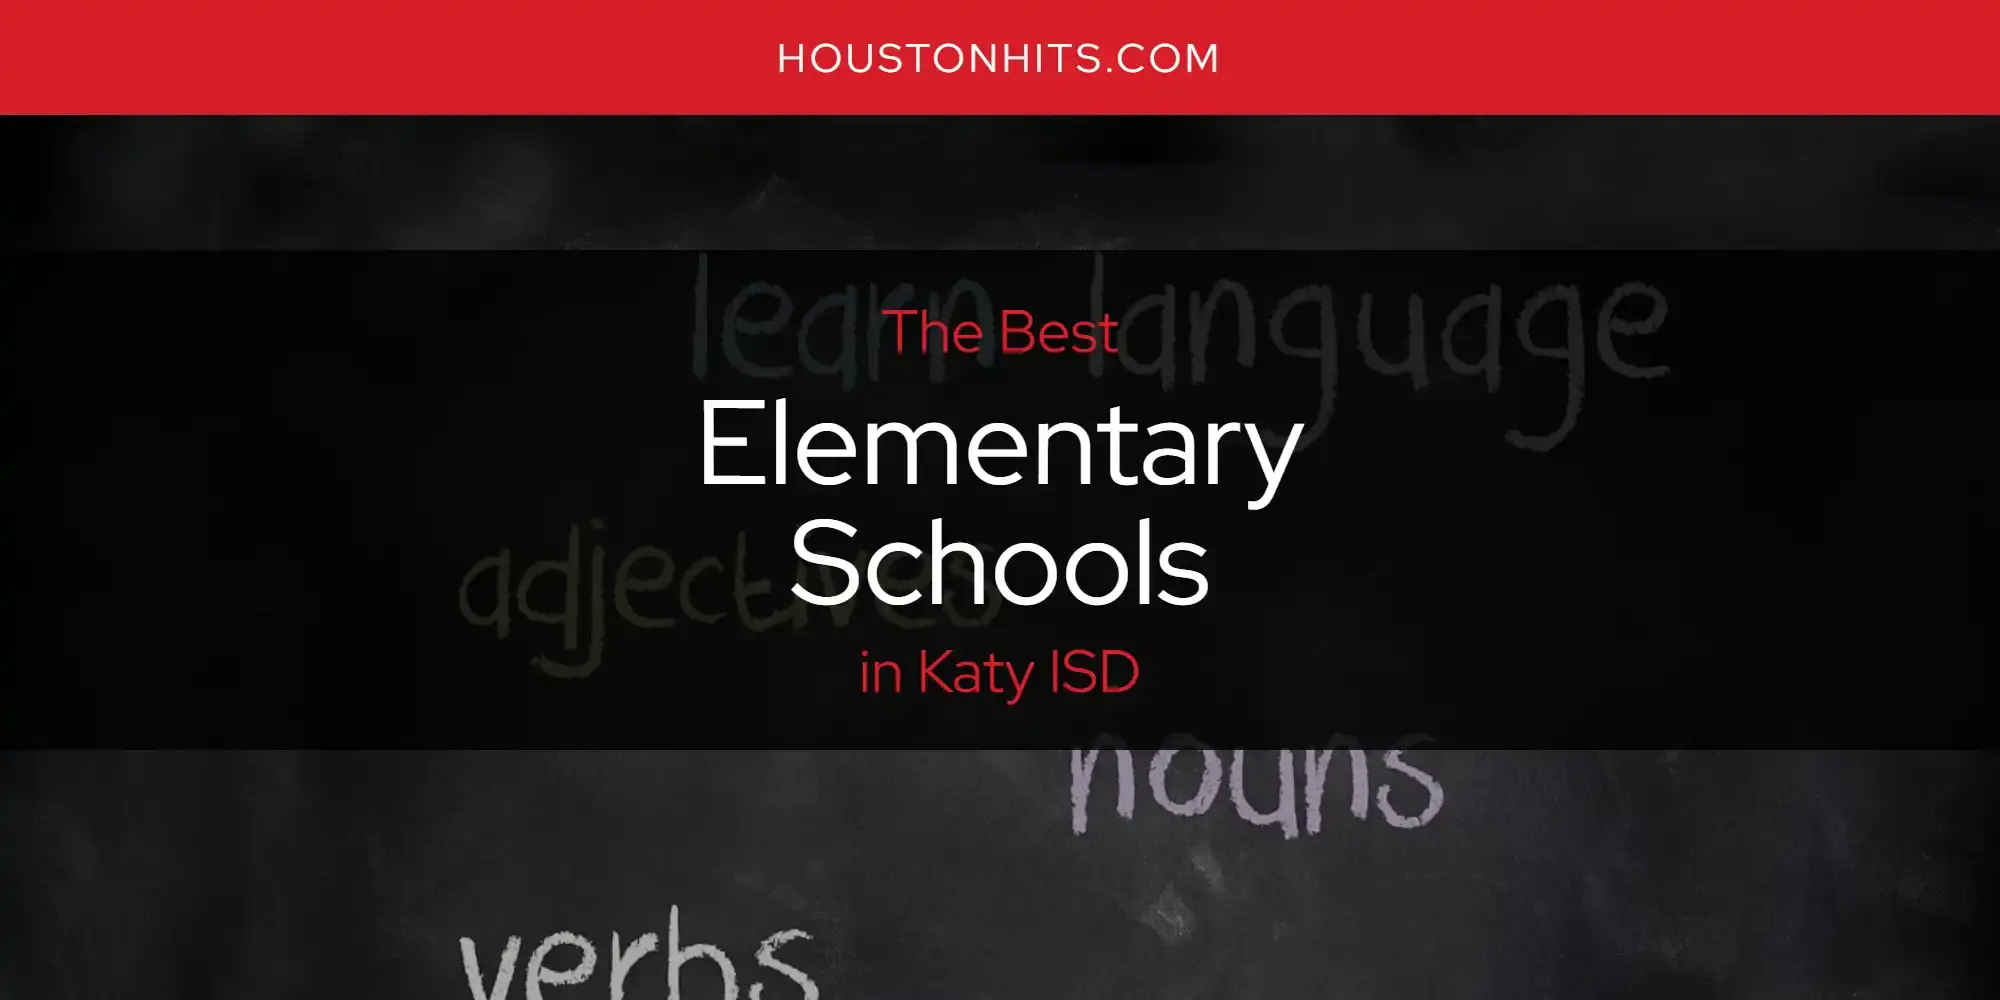 Best Elementary Schools in Katy ISD? Here's the Top 17